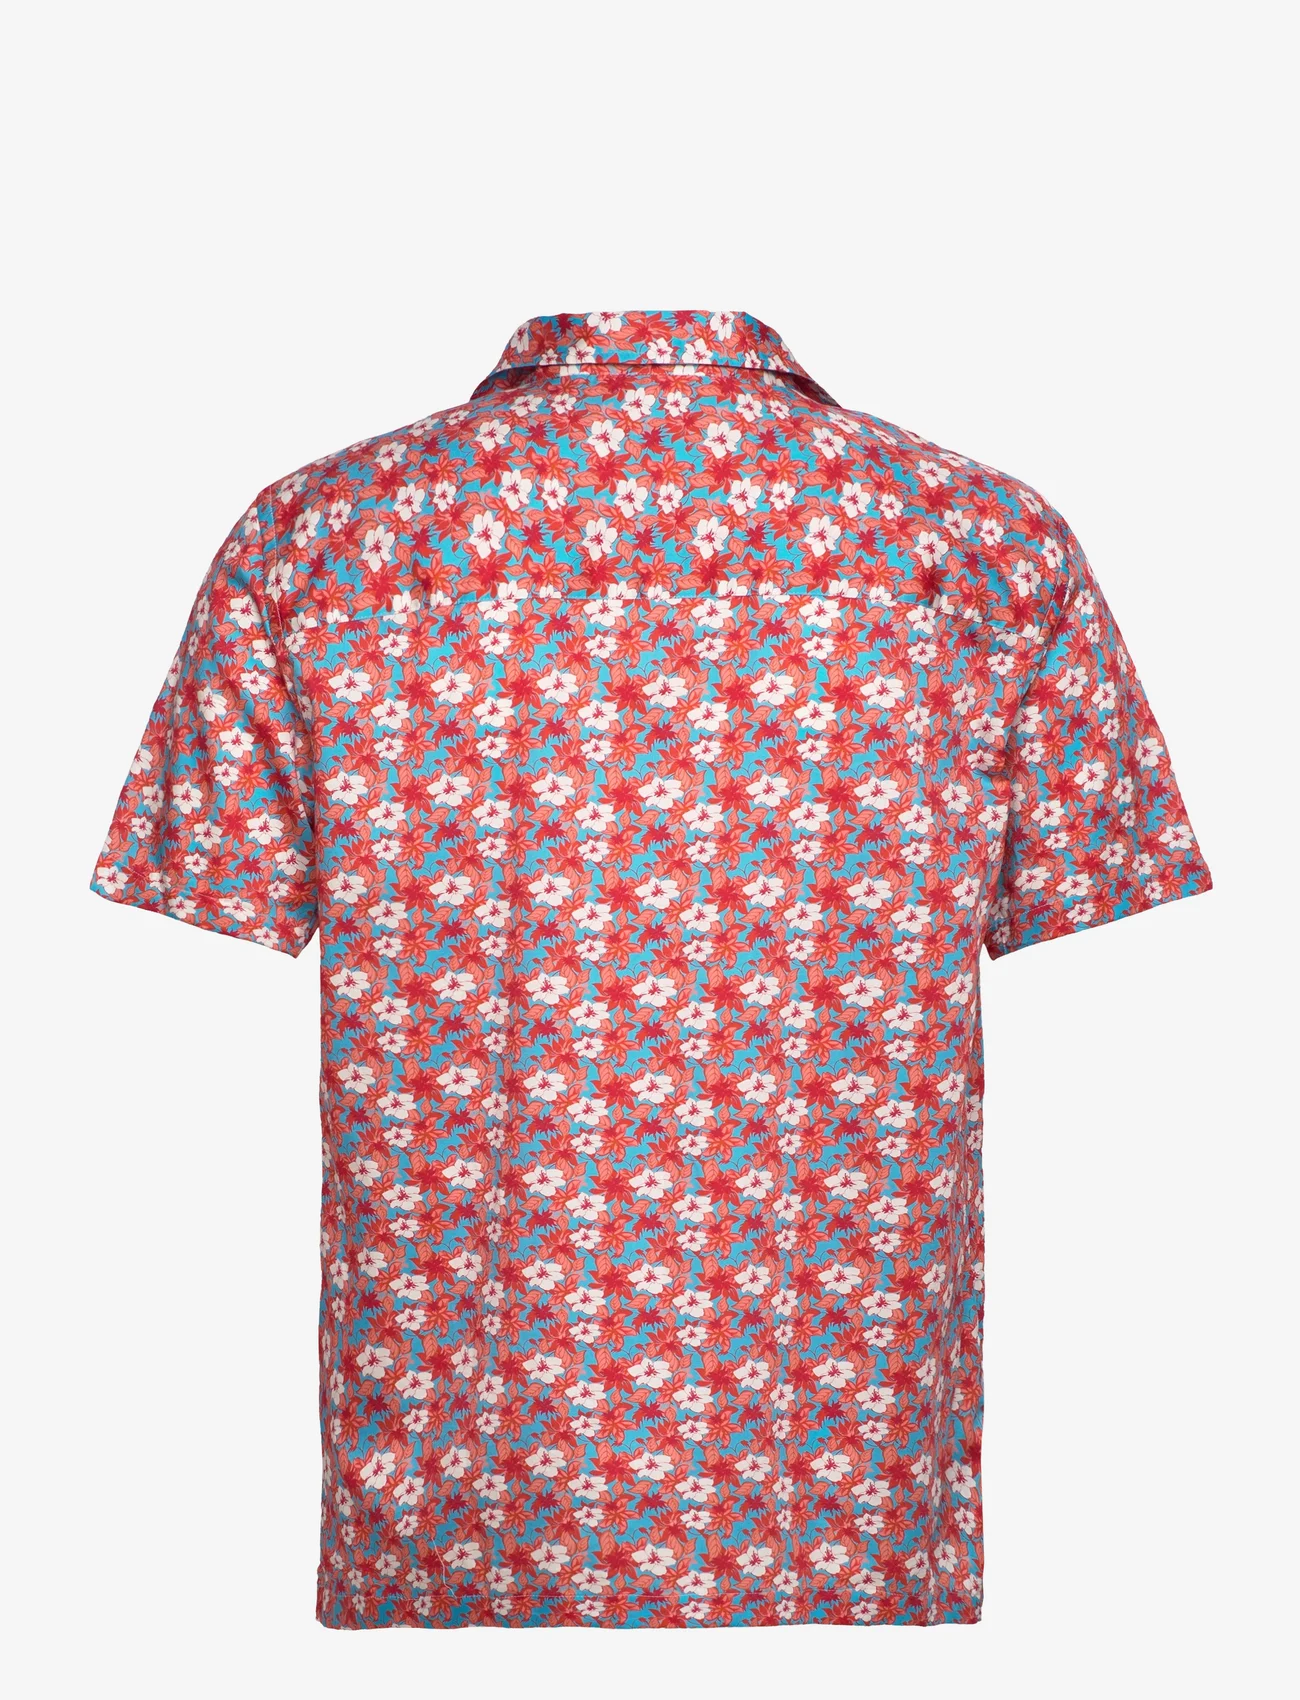 Lyle & Scott - Floral Print Resort Shirt - kortärmade skjortor - x298 tangerine tango - 1